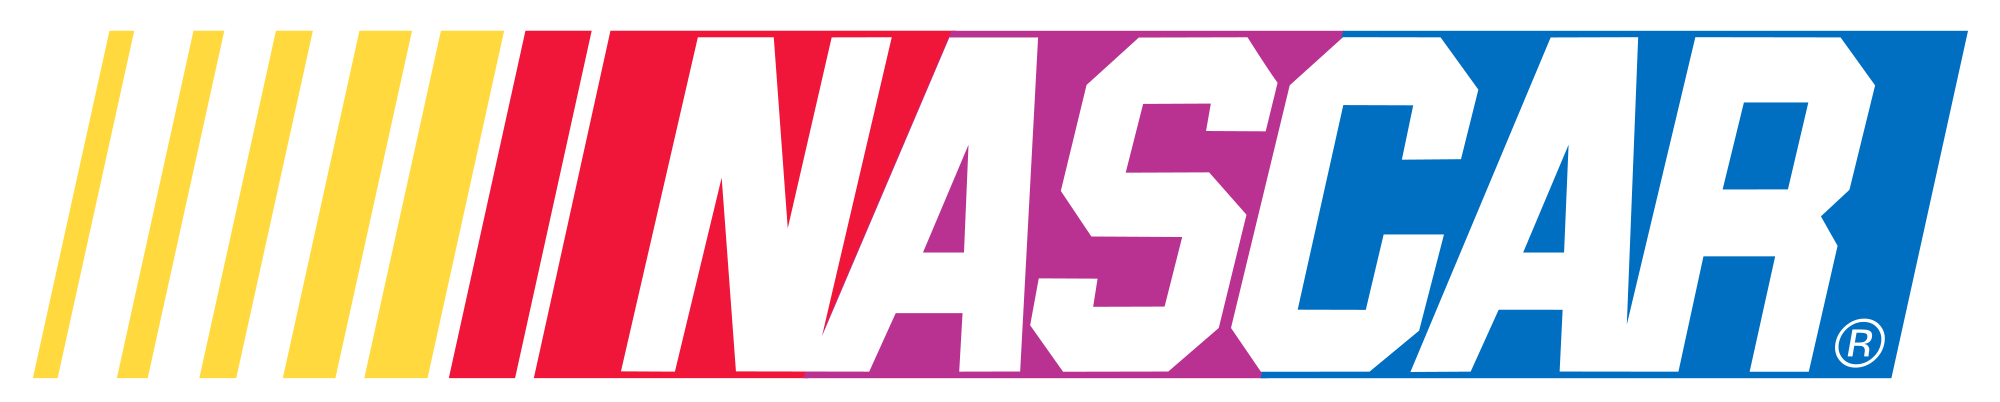 NASCAR Logo - NASCAR.svg